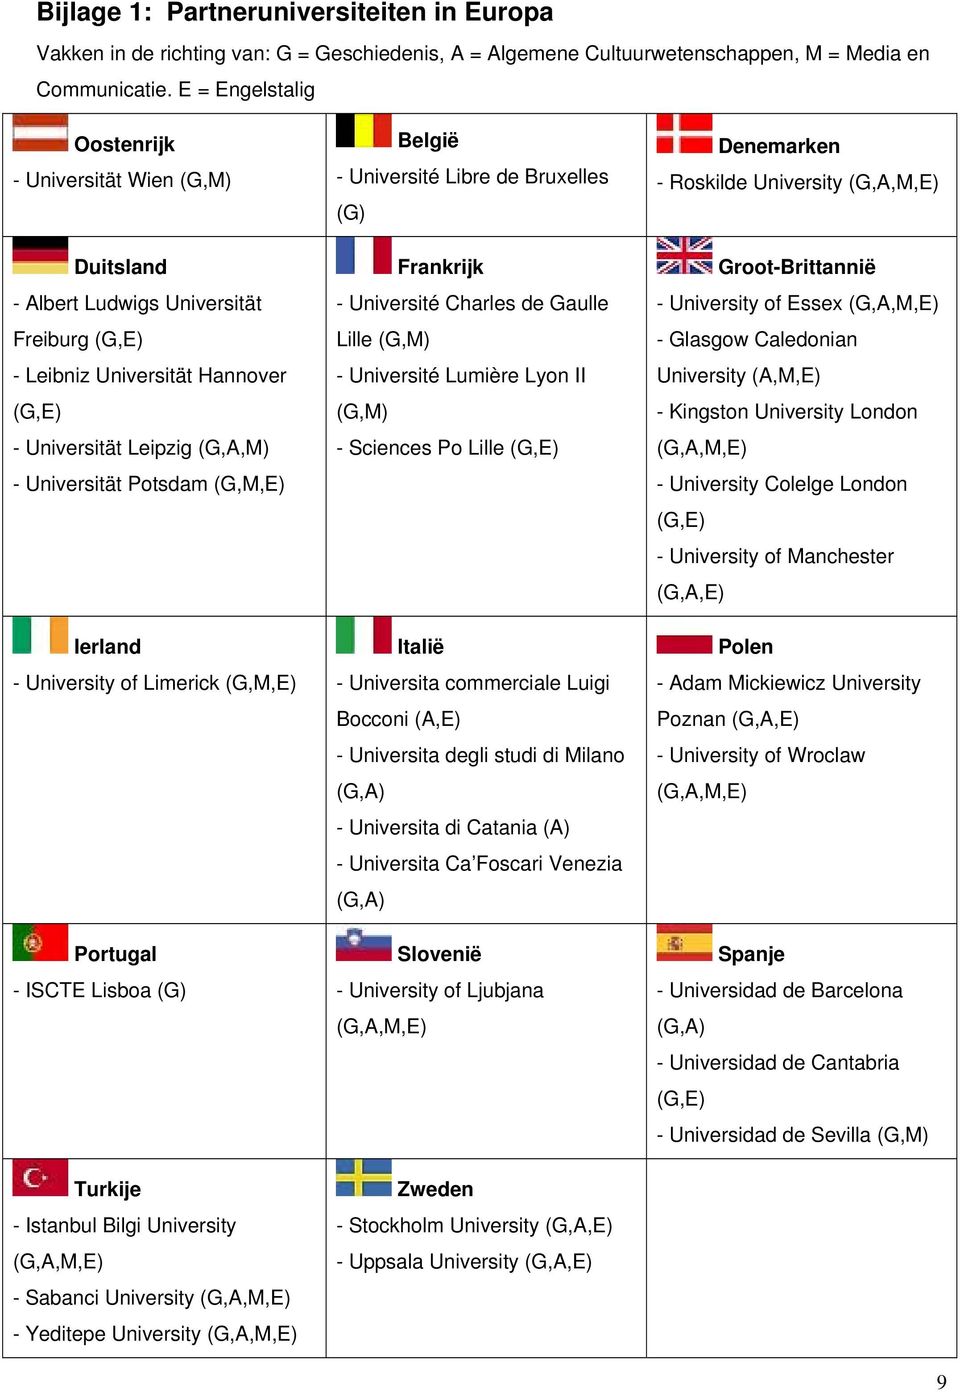 (G,M,E) Ierland - University of Limerick (G,M,E) Portugal - ISCTE Lisboa (G) Turkije - Istanbul Bilgi University - Sabanci University - Yeditepe University België - Université Libre de Bruxelles (G)